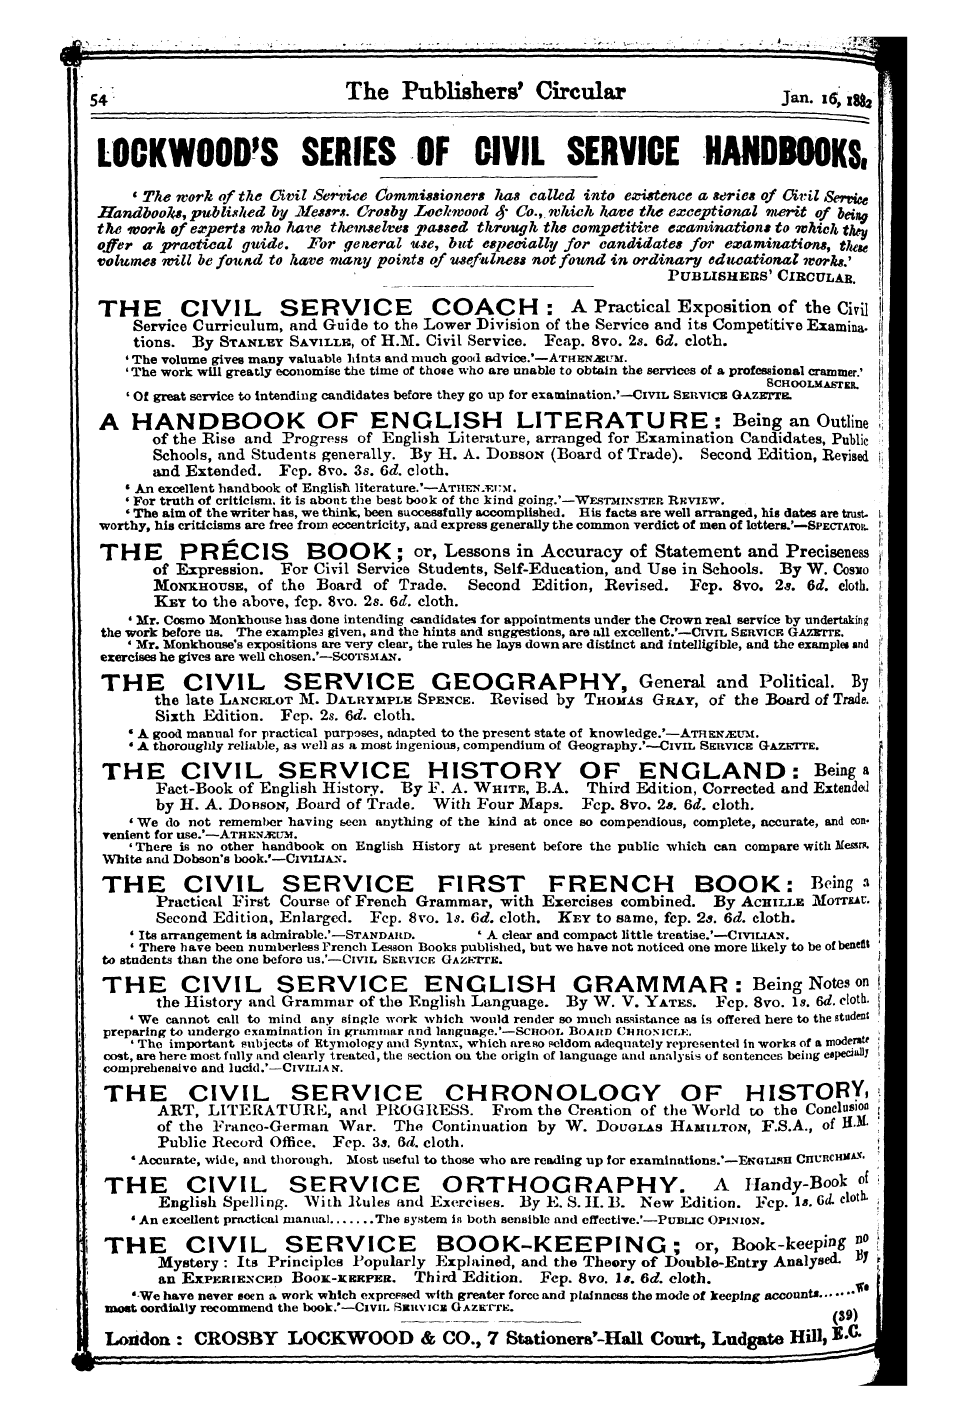 Publishers’ Circular (1880-1890): jS F Y, 1st edition: 54